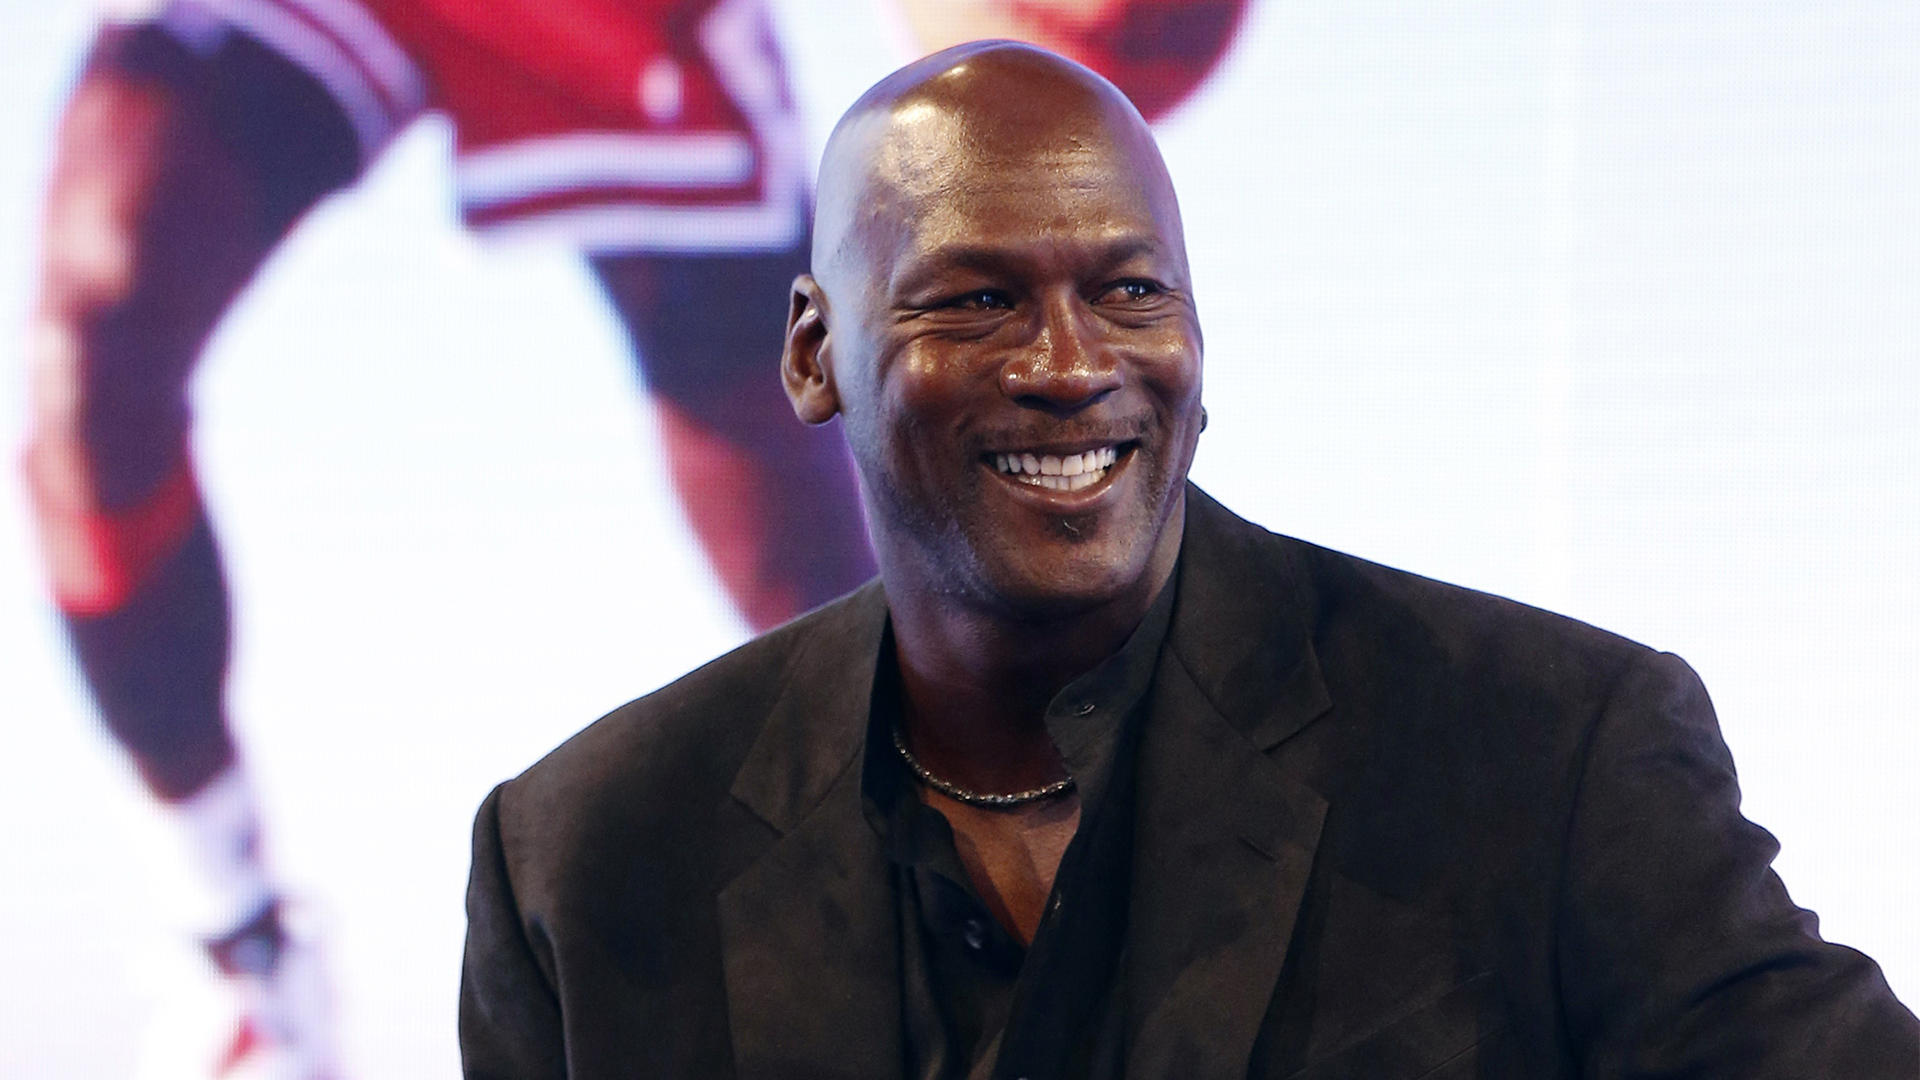 Michael Jordan And The Jordan Brand Pledge $1M To Support Aspiring Black Journalists